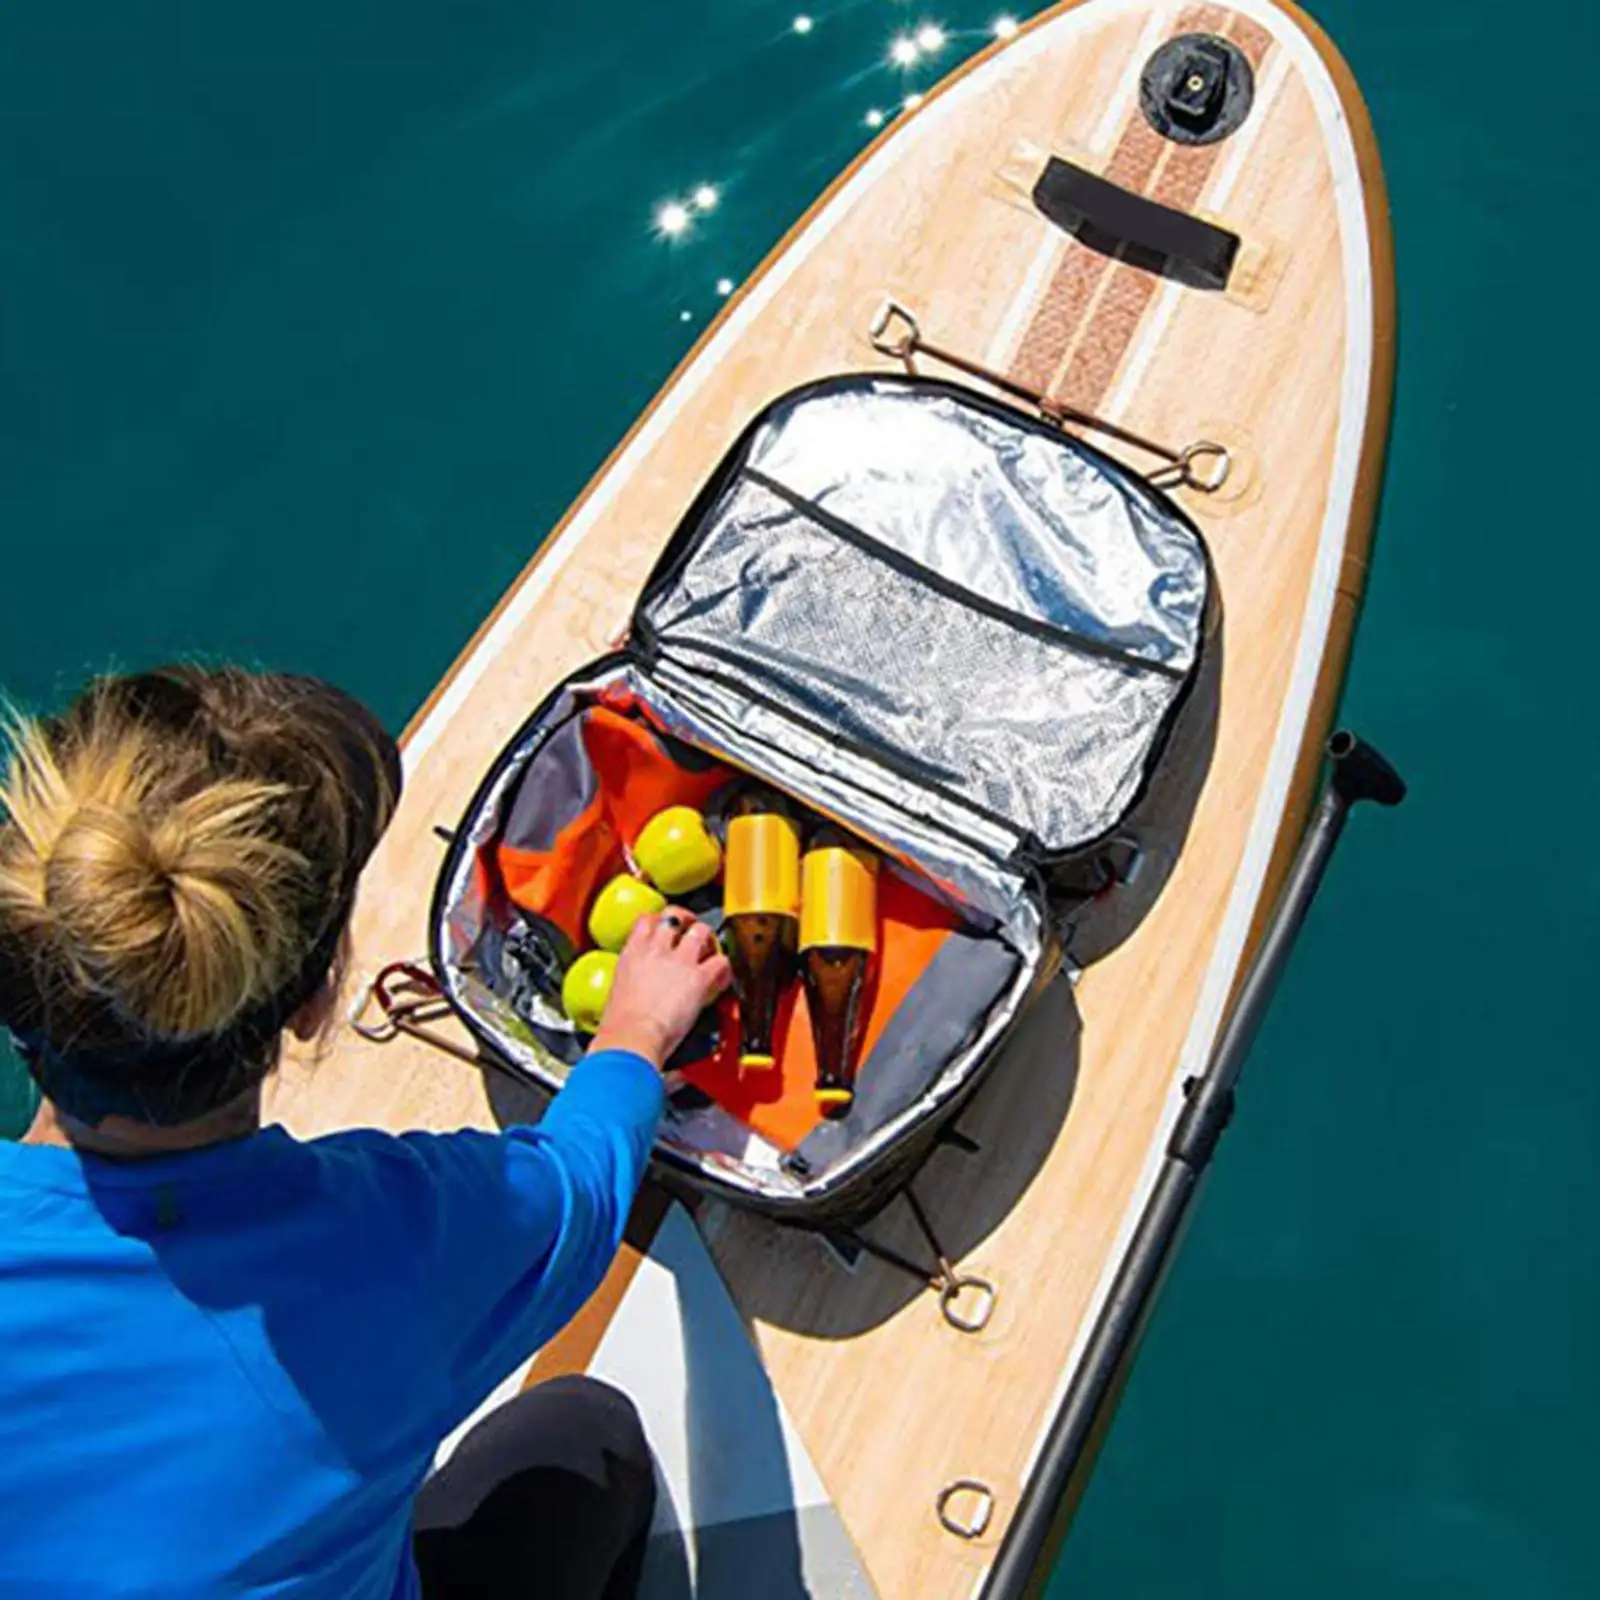 Surf Deck Cooler Bag Mesh Top for Speedboats, Kayaks, Canoeetc Zippered